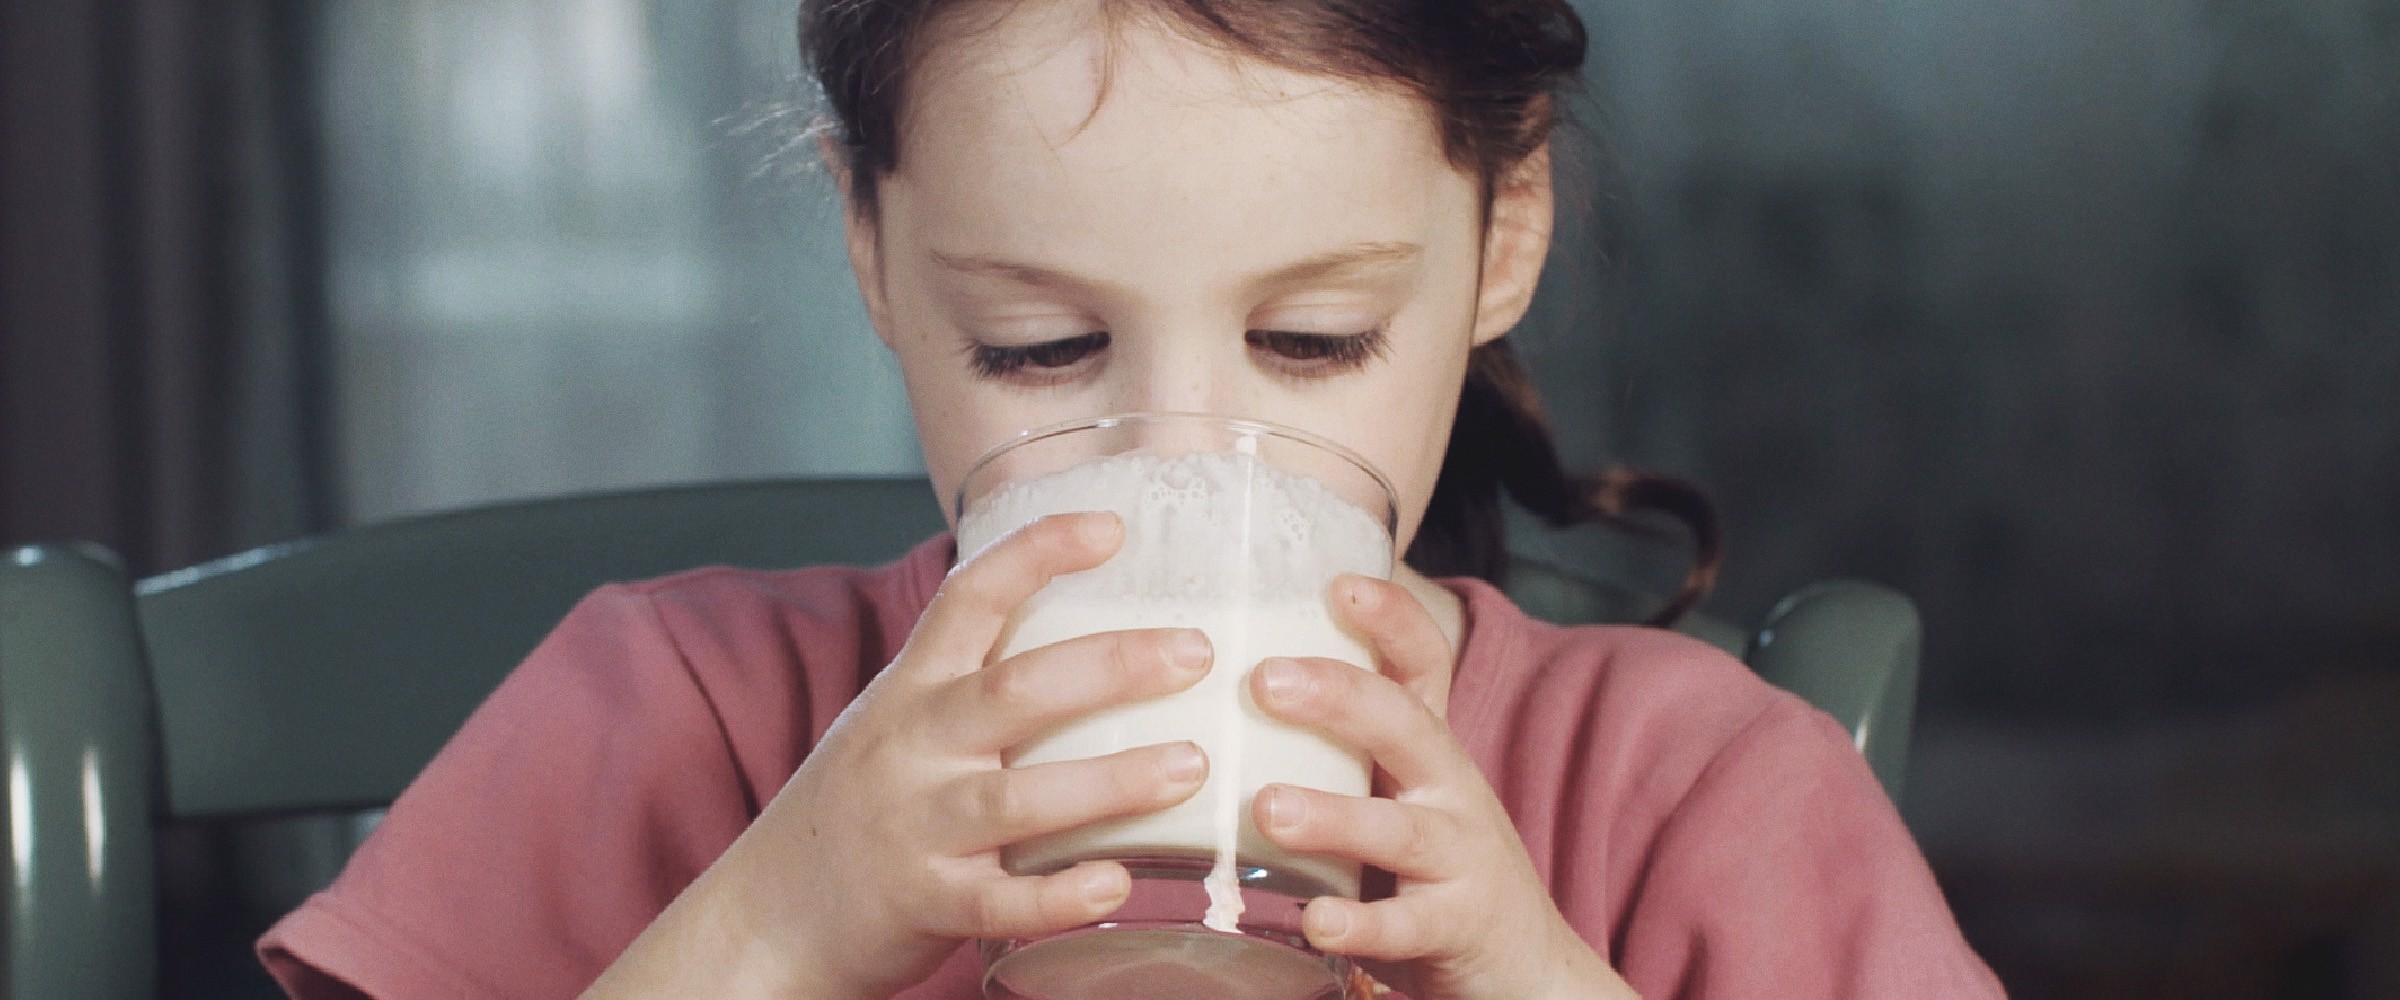 Er mælk bæredytigt?